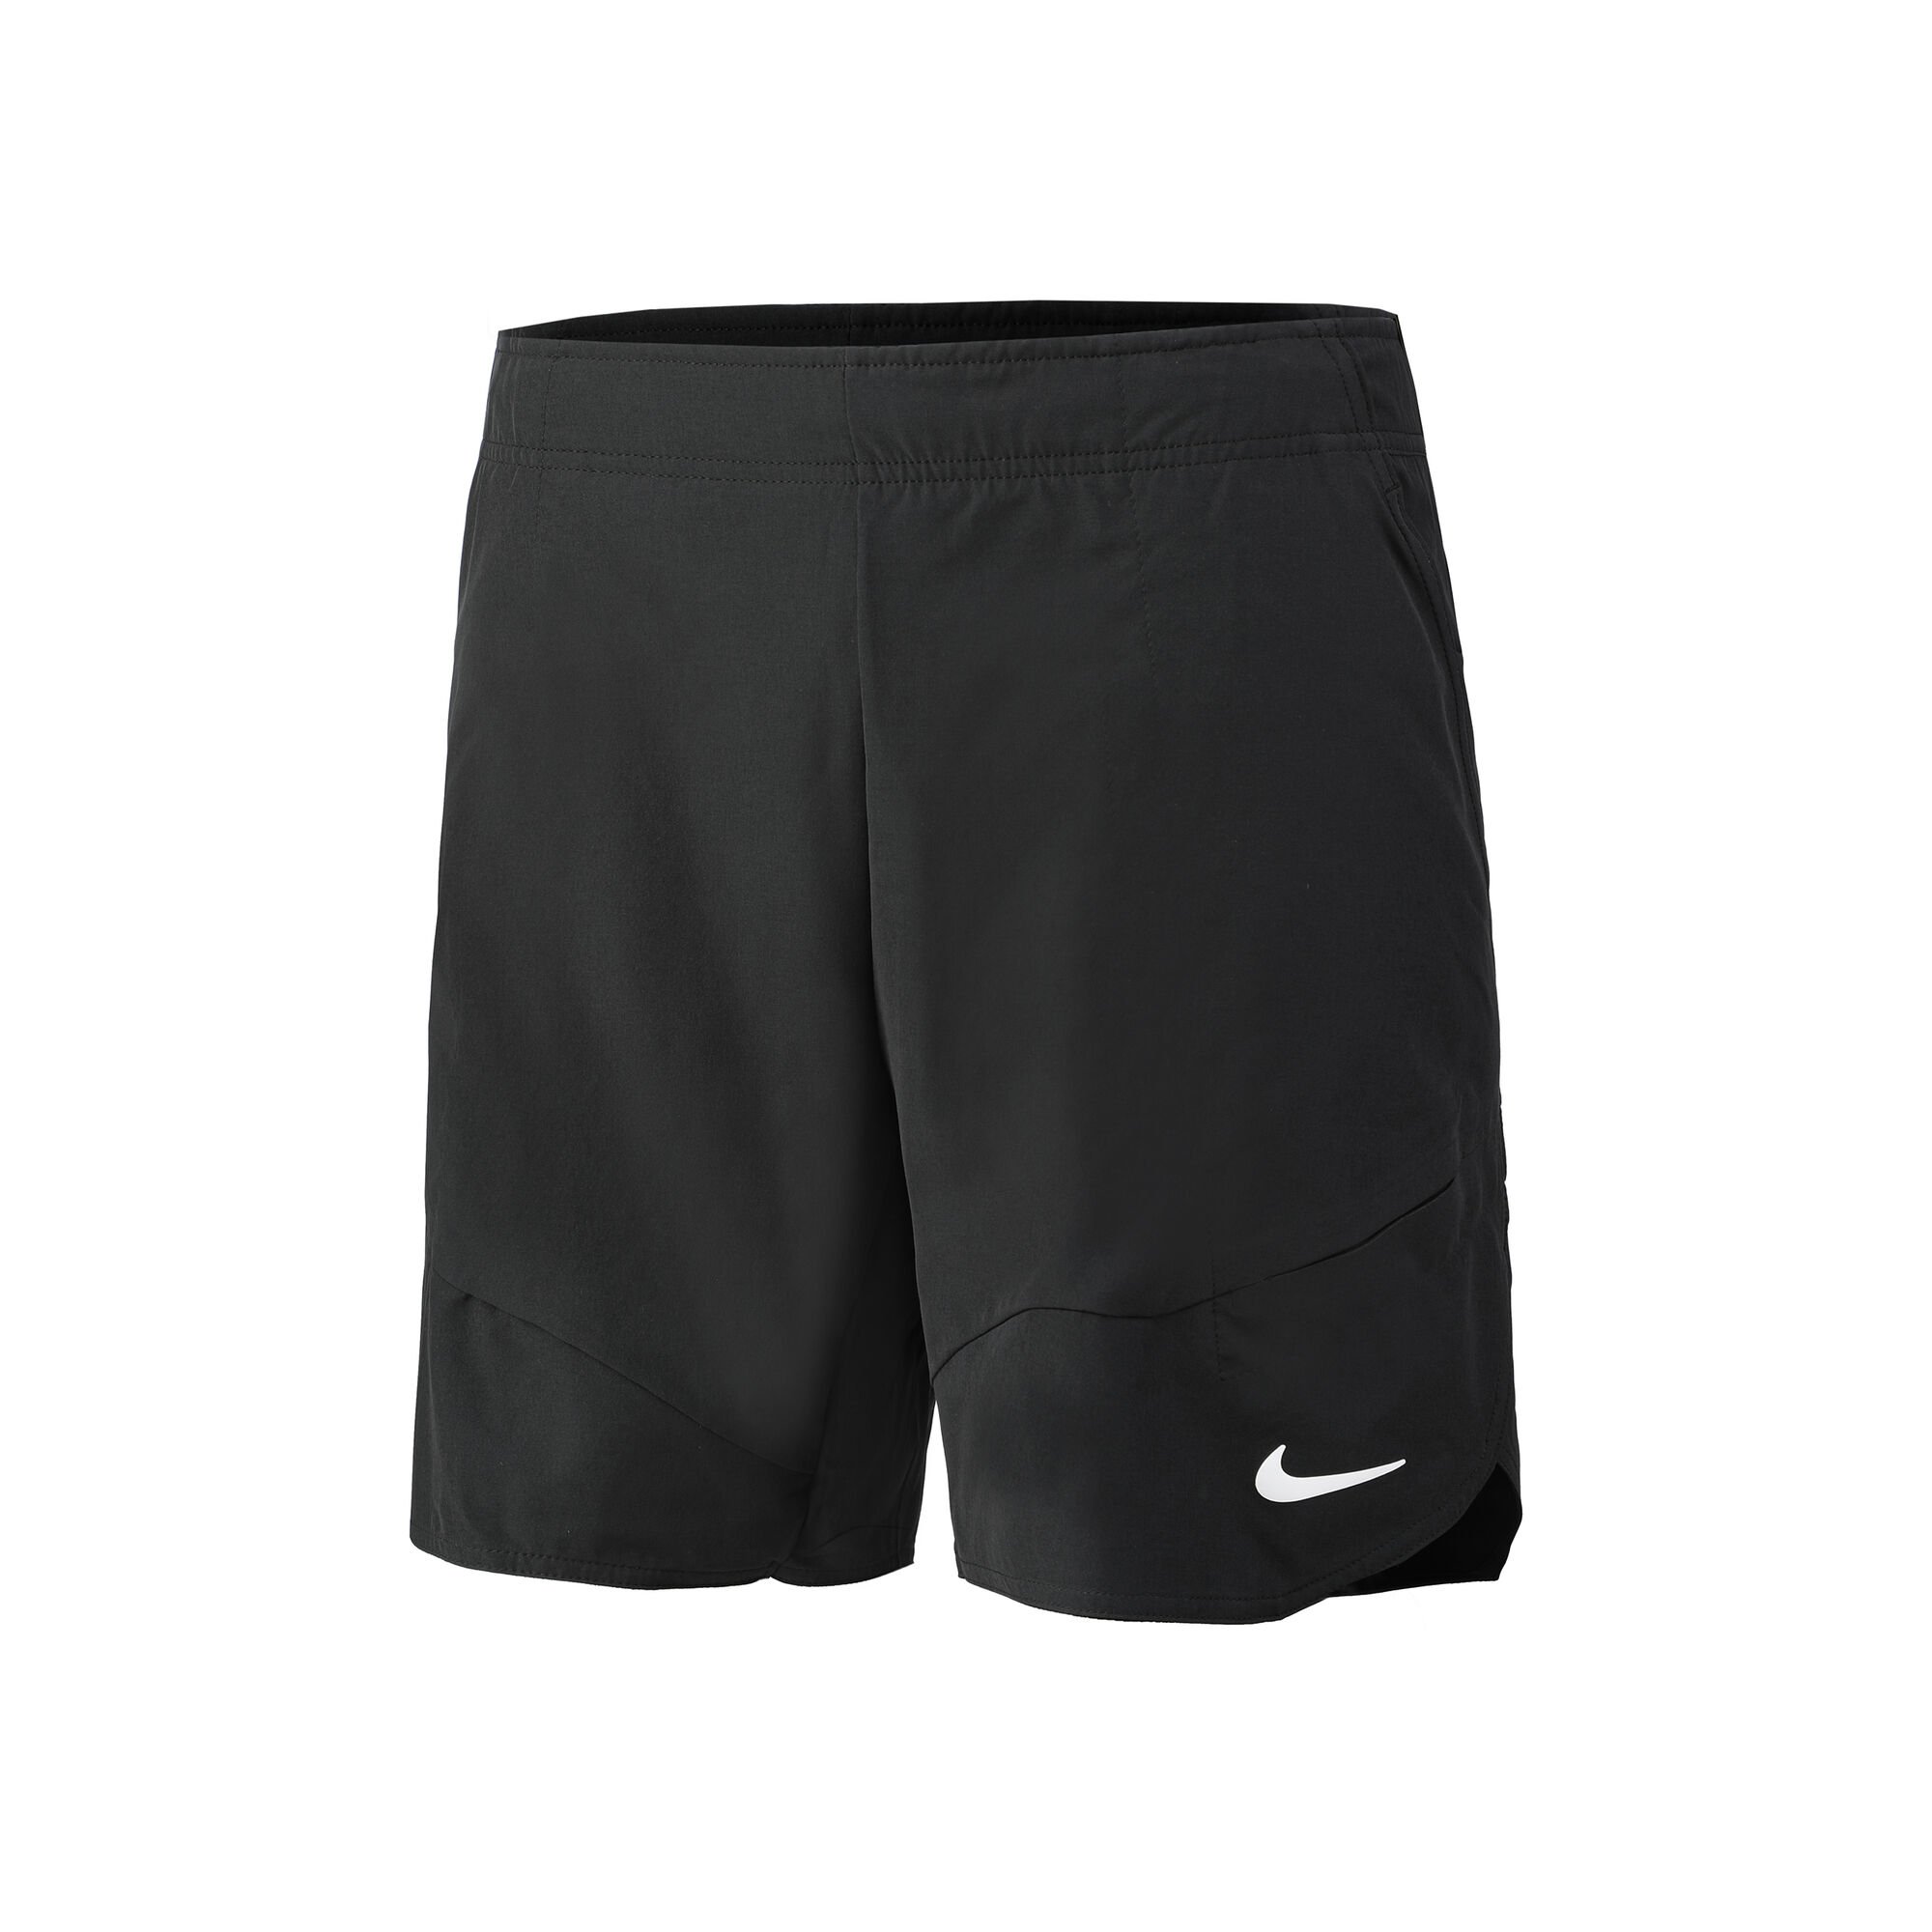 Buy Nike Dri-Fit Advantage 7in Shorts Men Black online | Tennis Point COM